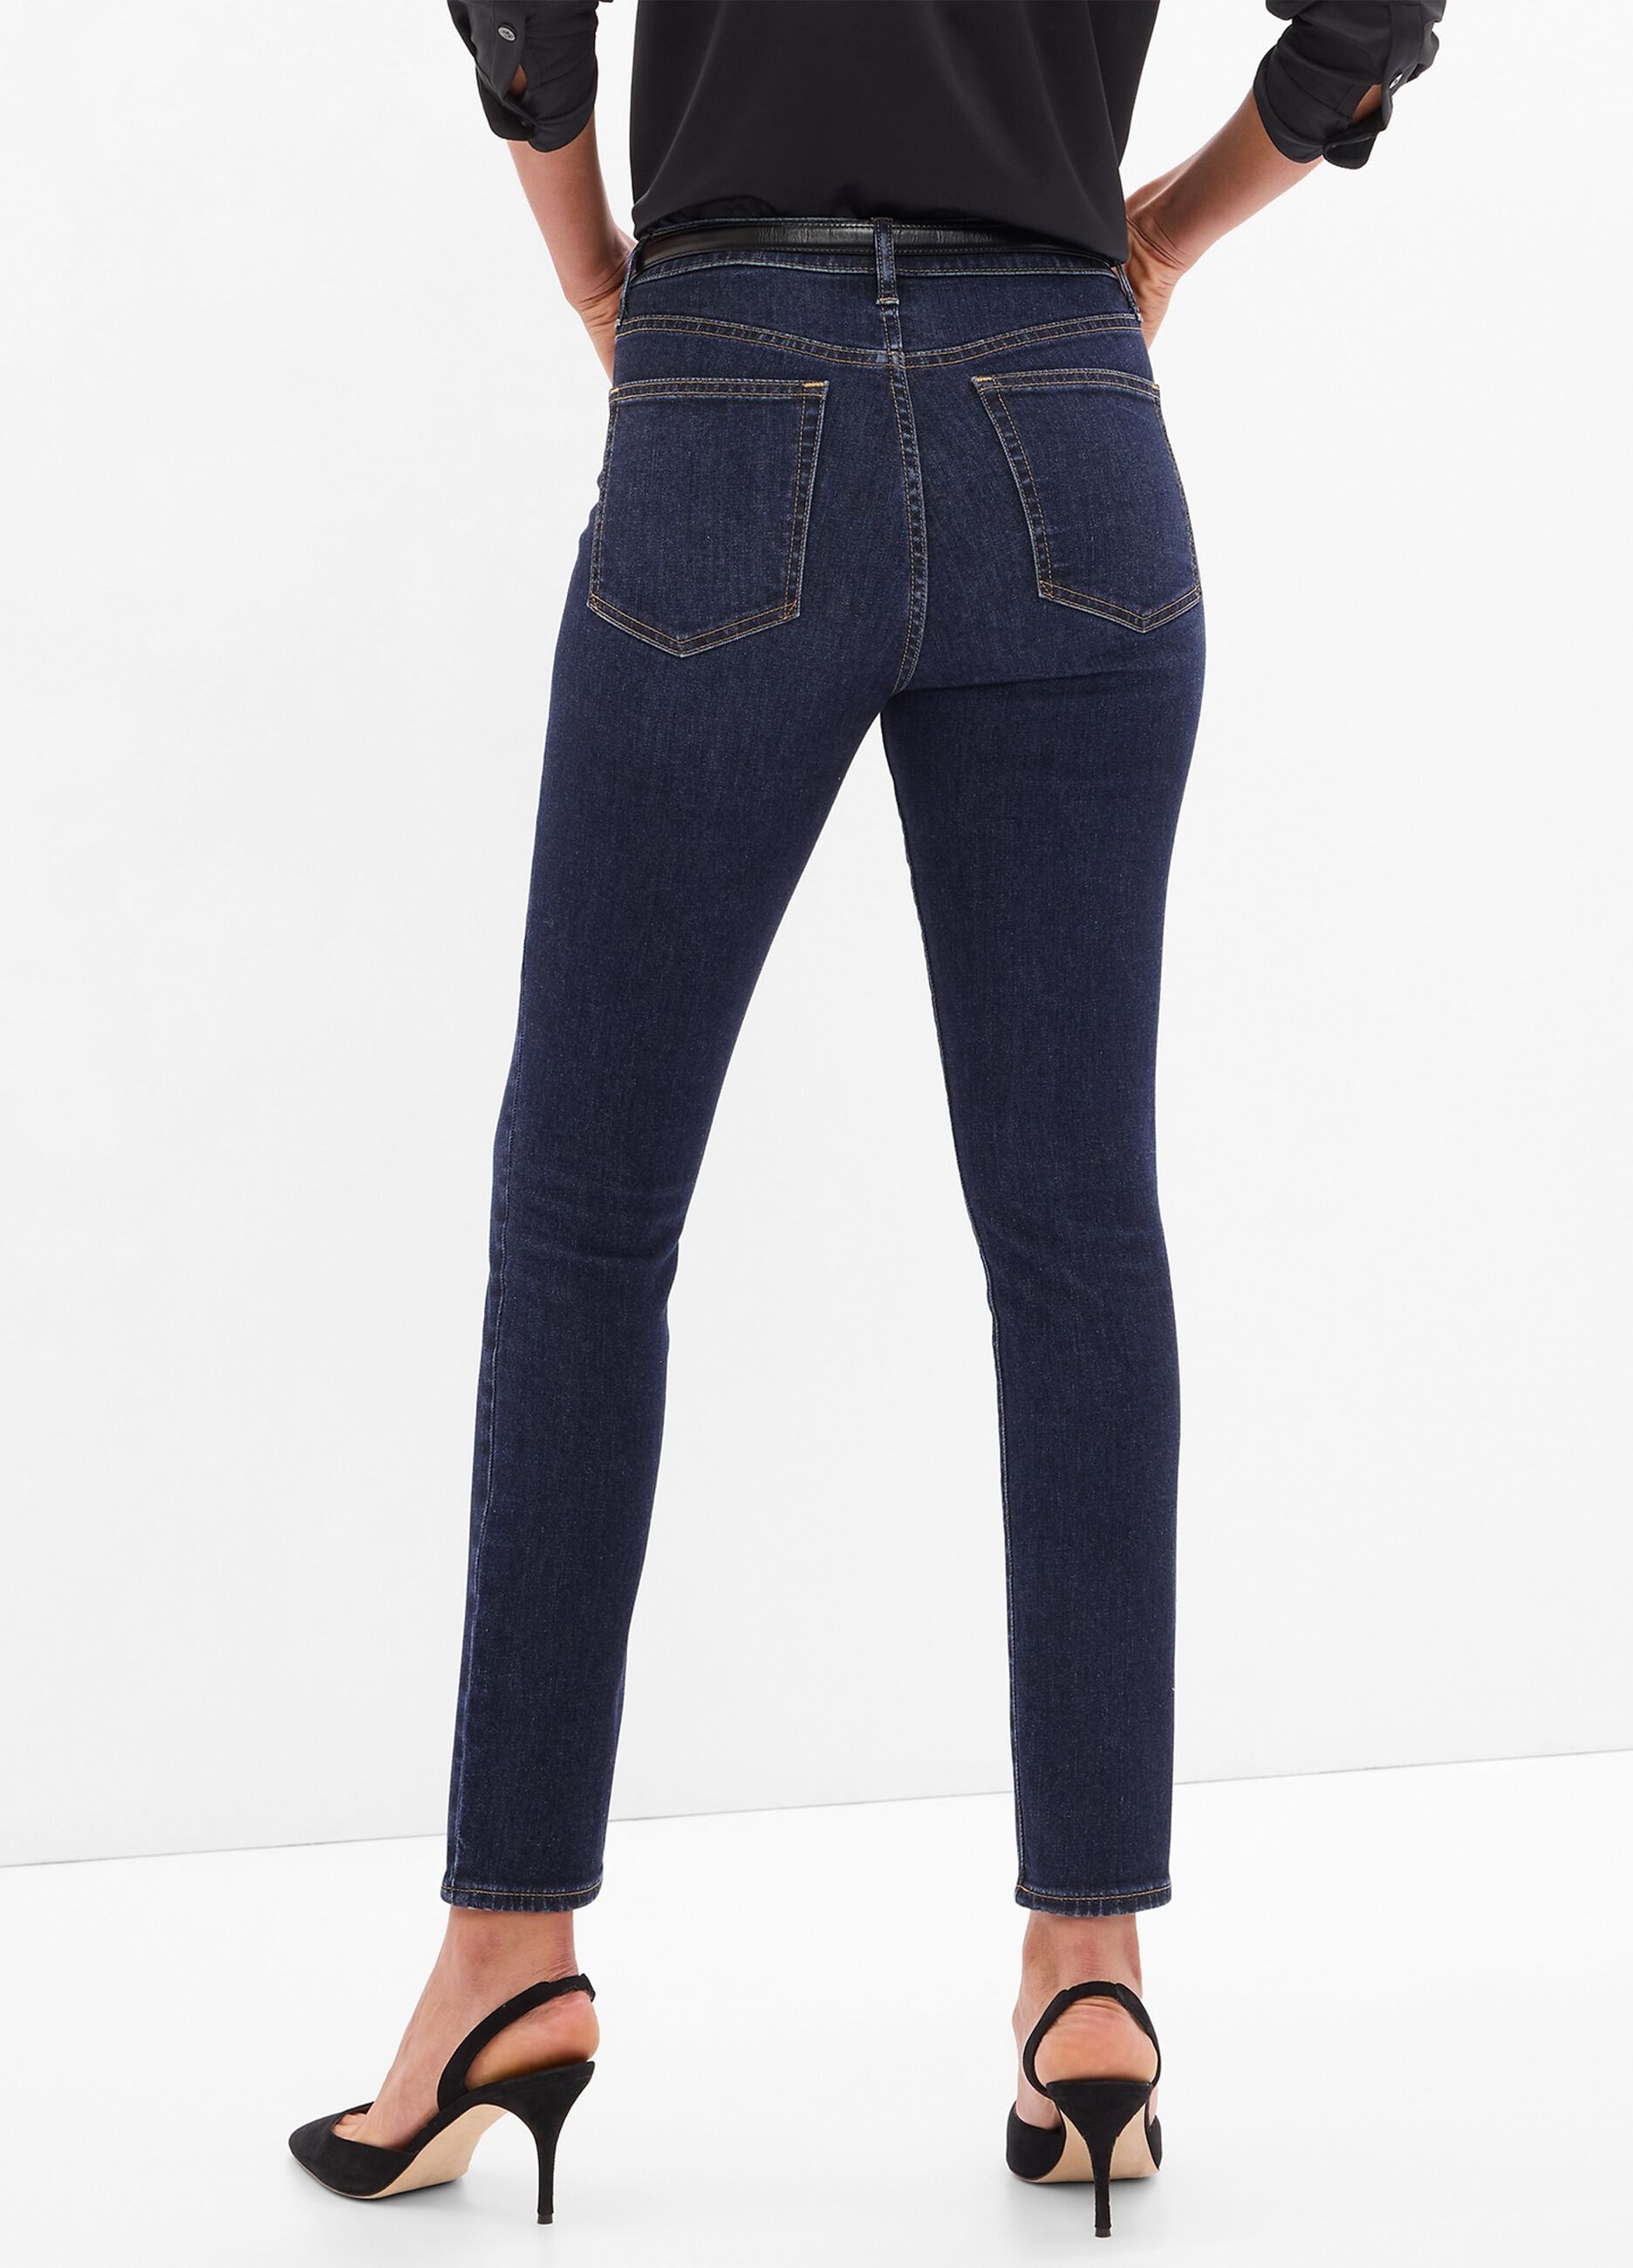 High-waist, skinny fit jeans